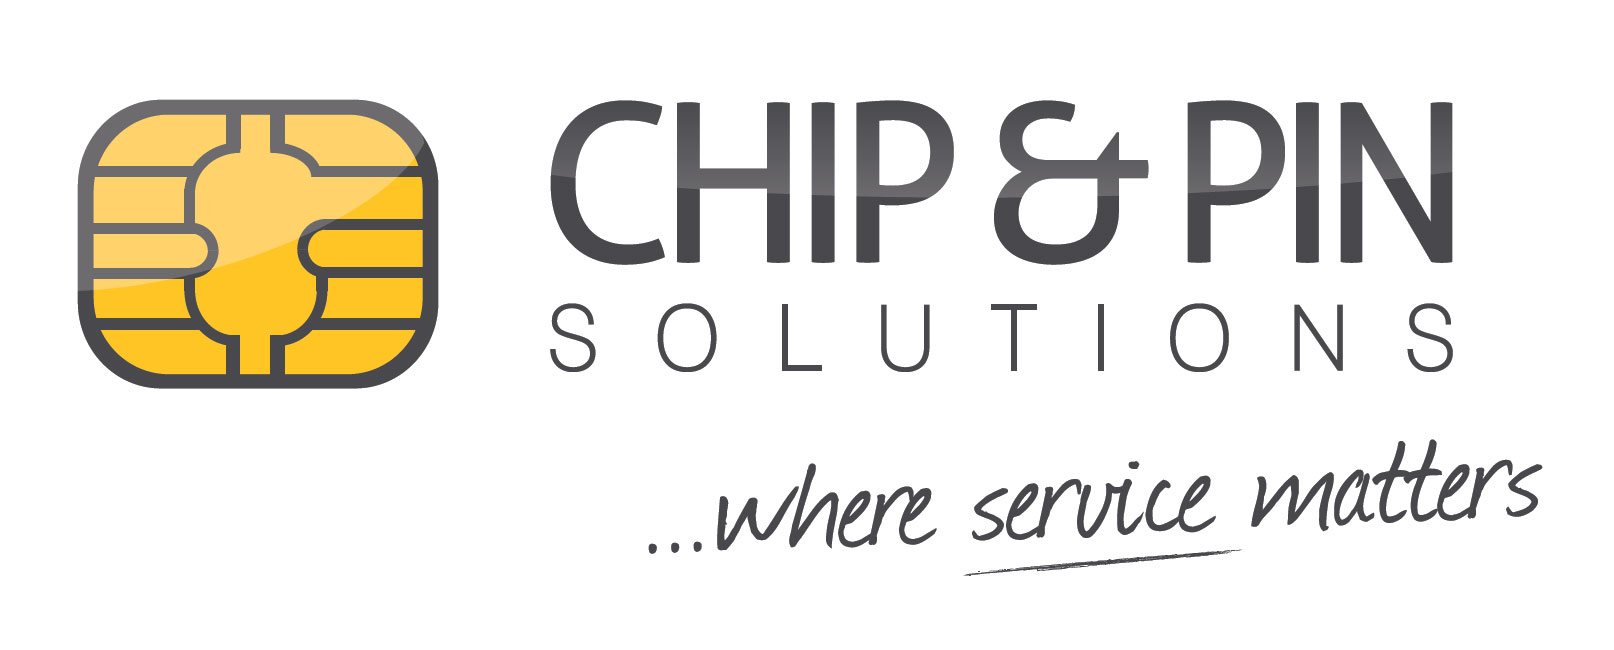 Chip & PIN Solutions Ltd